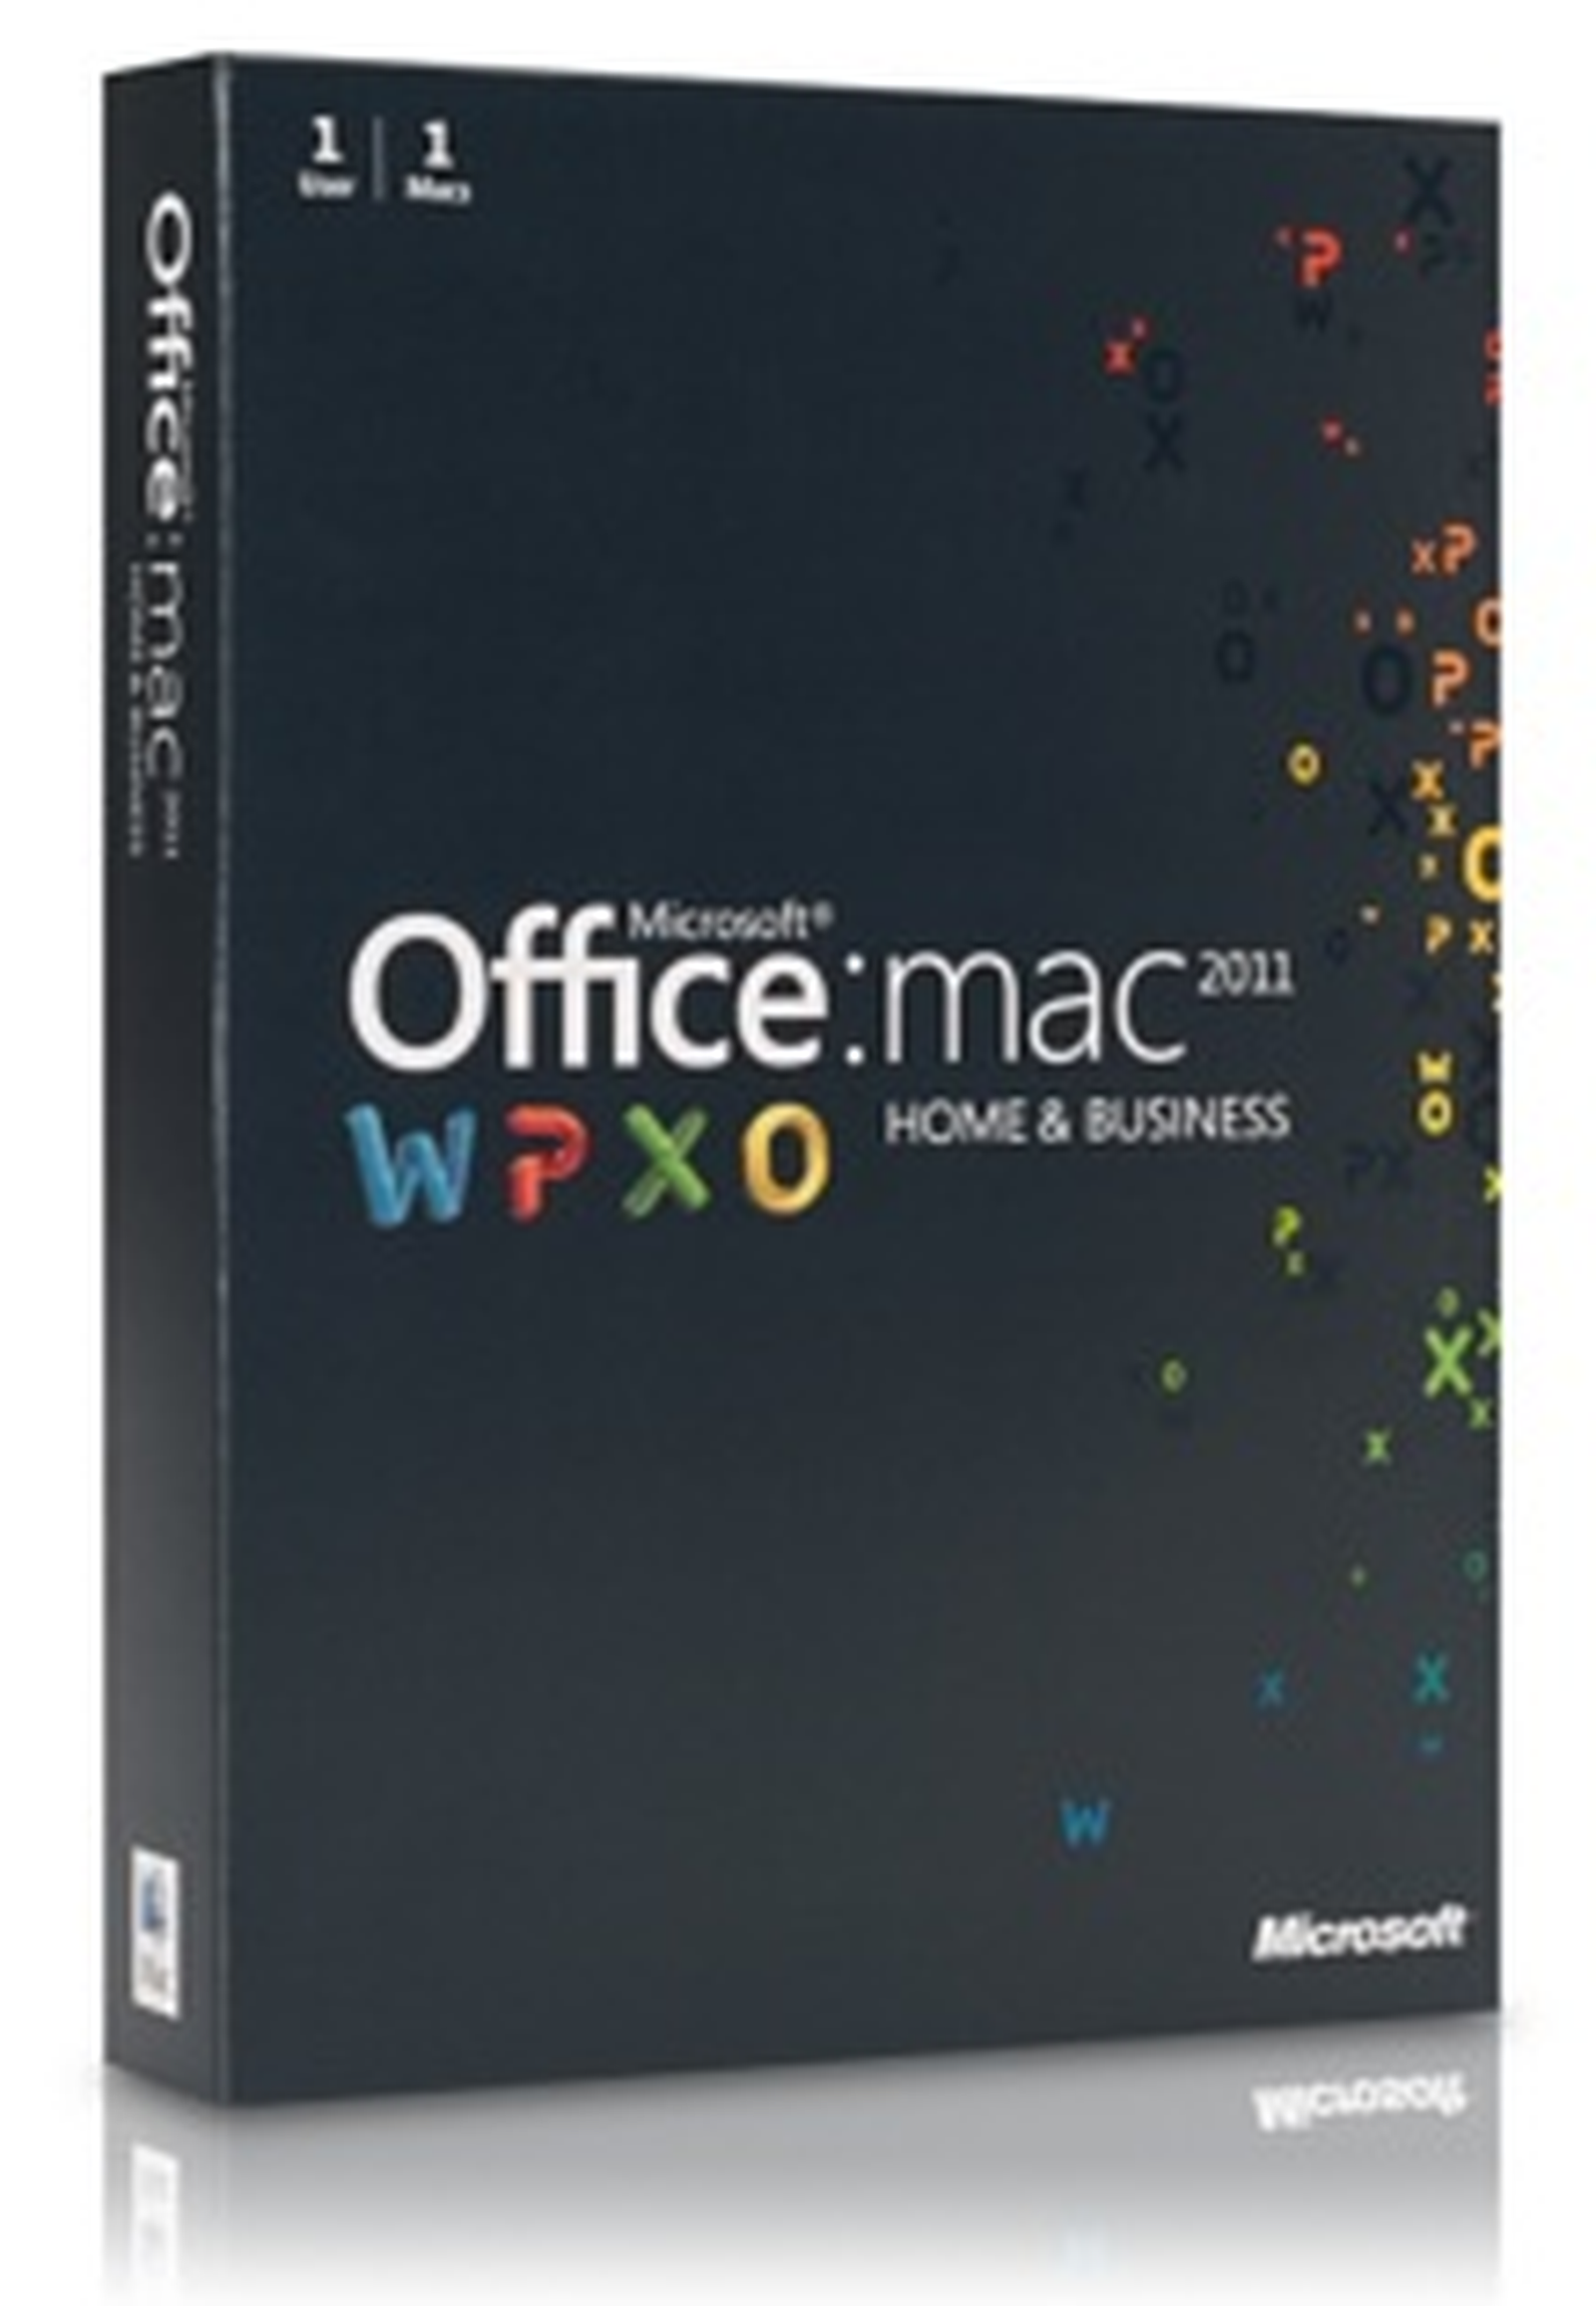 microsoft office 2008 for mac 12.3 6 update